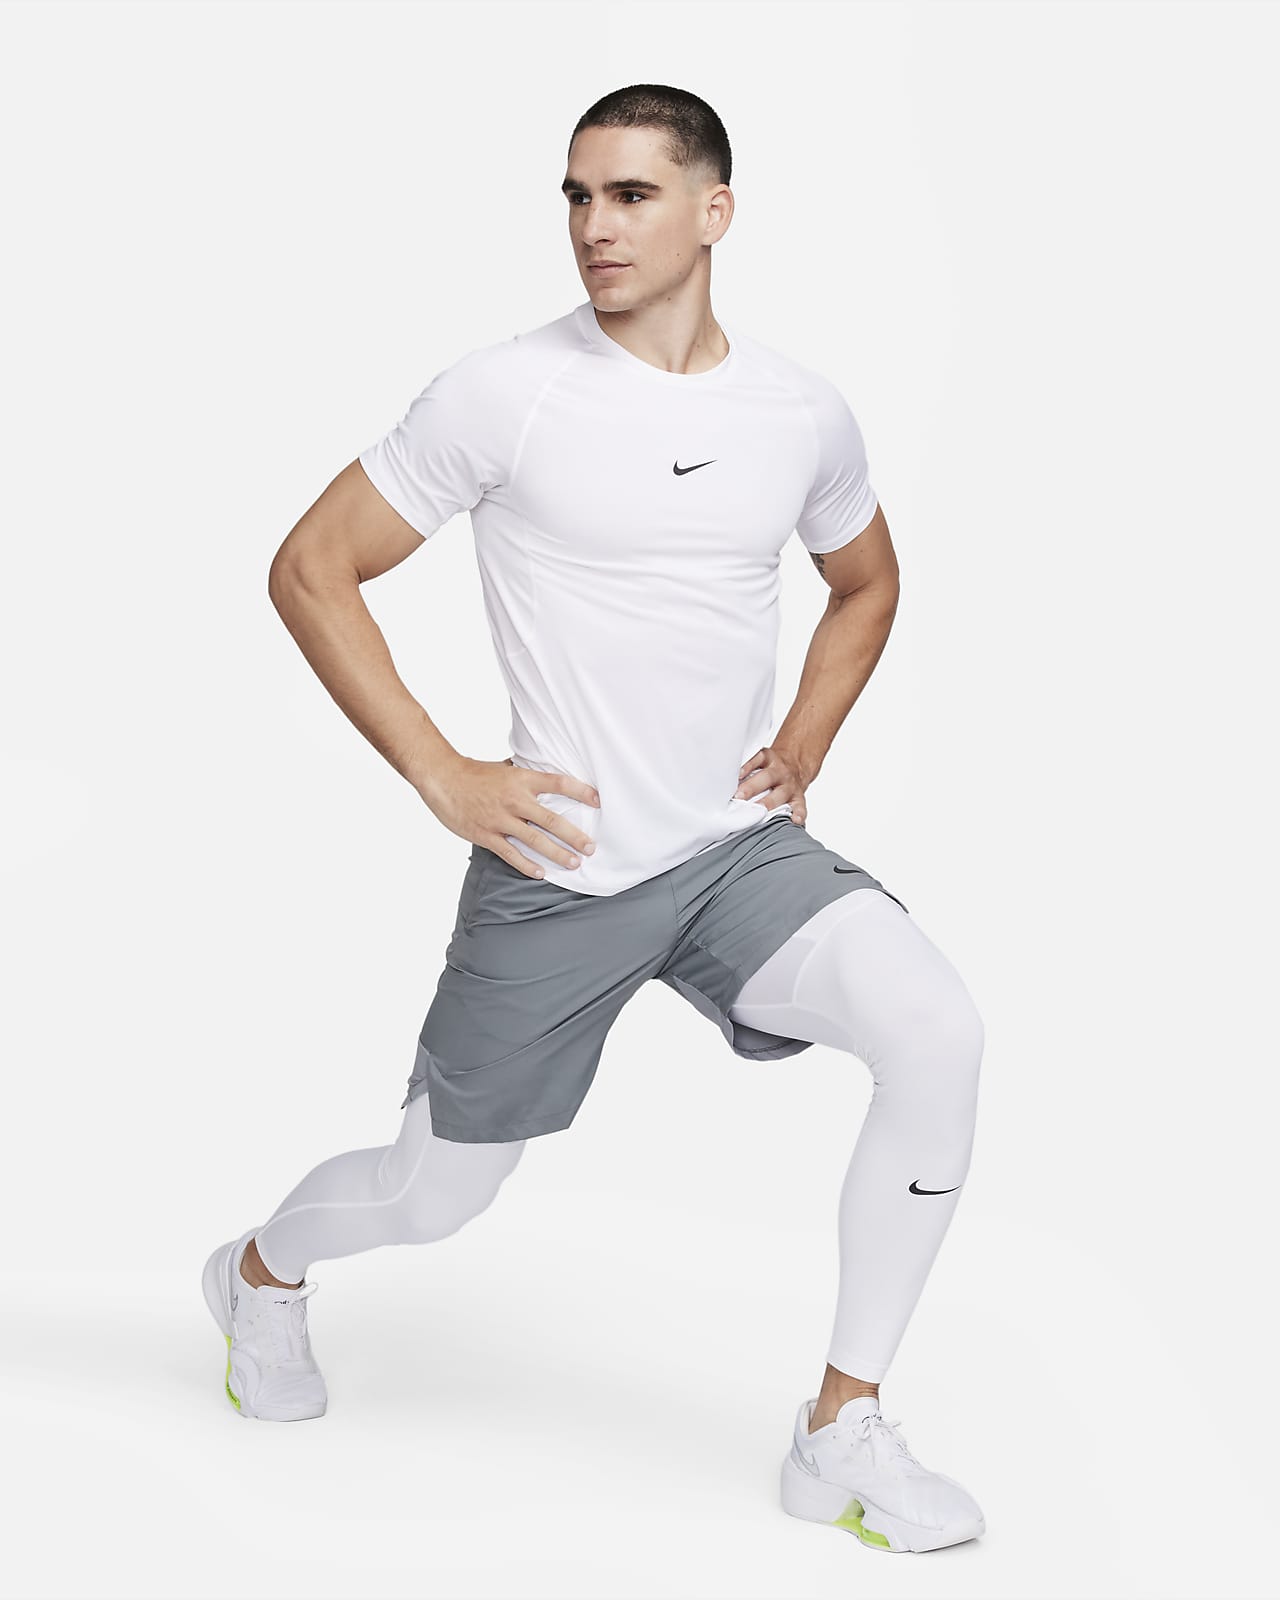 Nike Pro Warm Men's Tights.